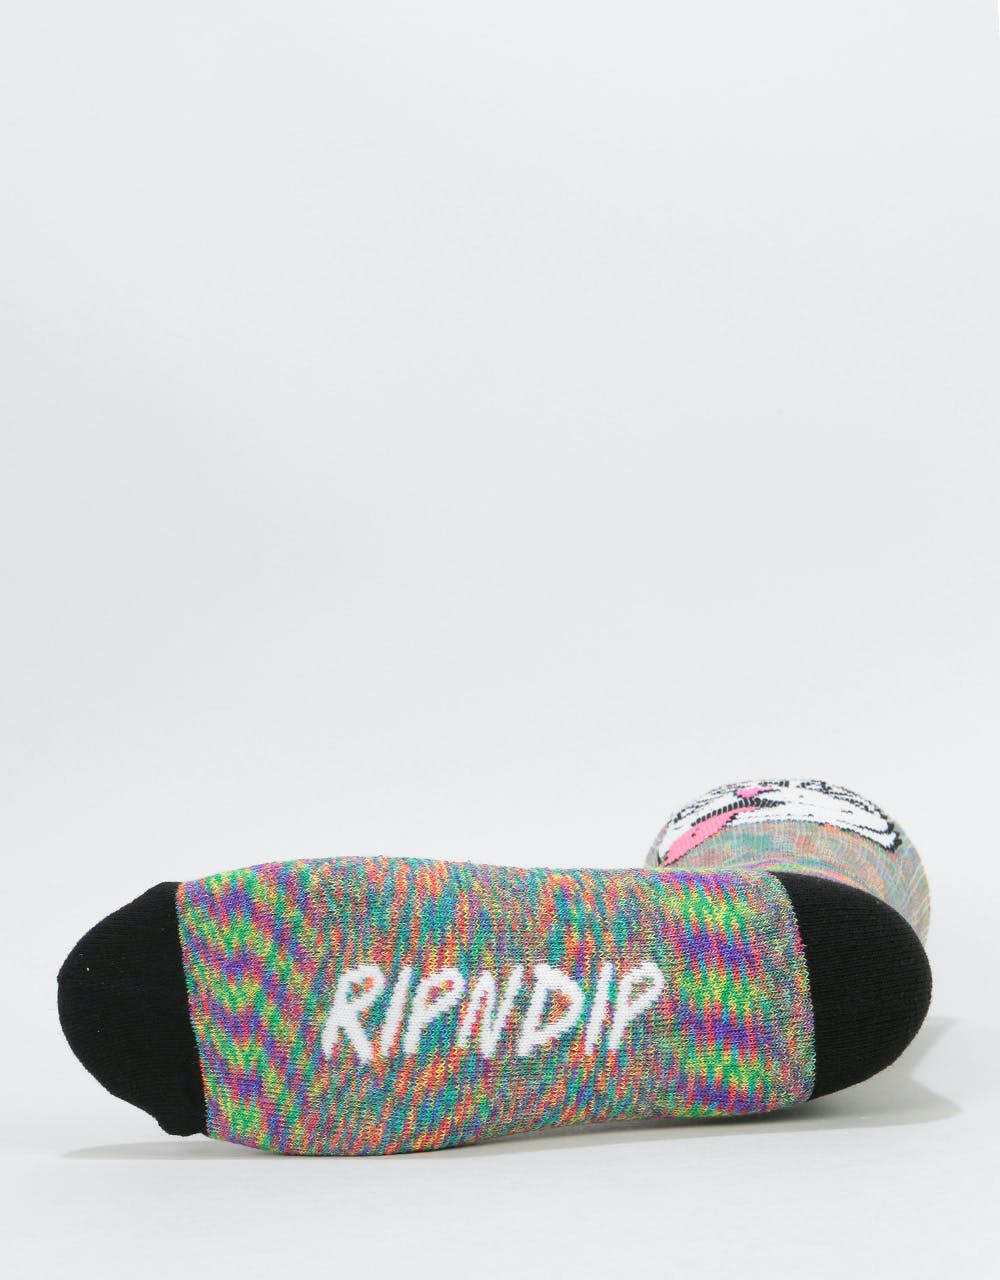 RIPNDIP Pill Socks - Rainbow Spiral Dye